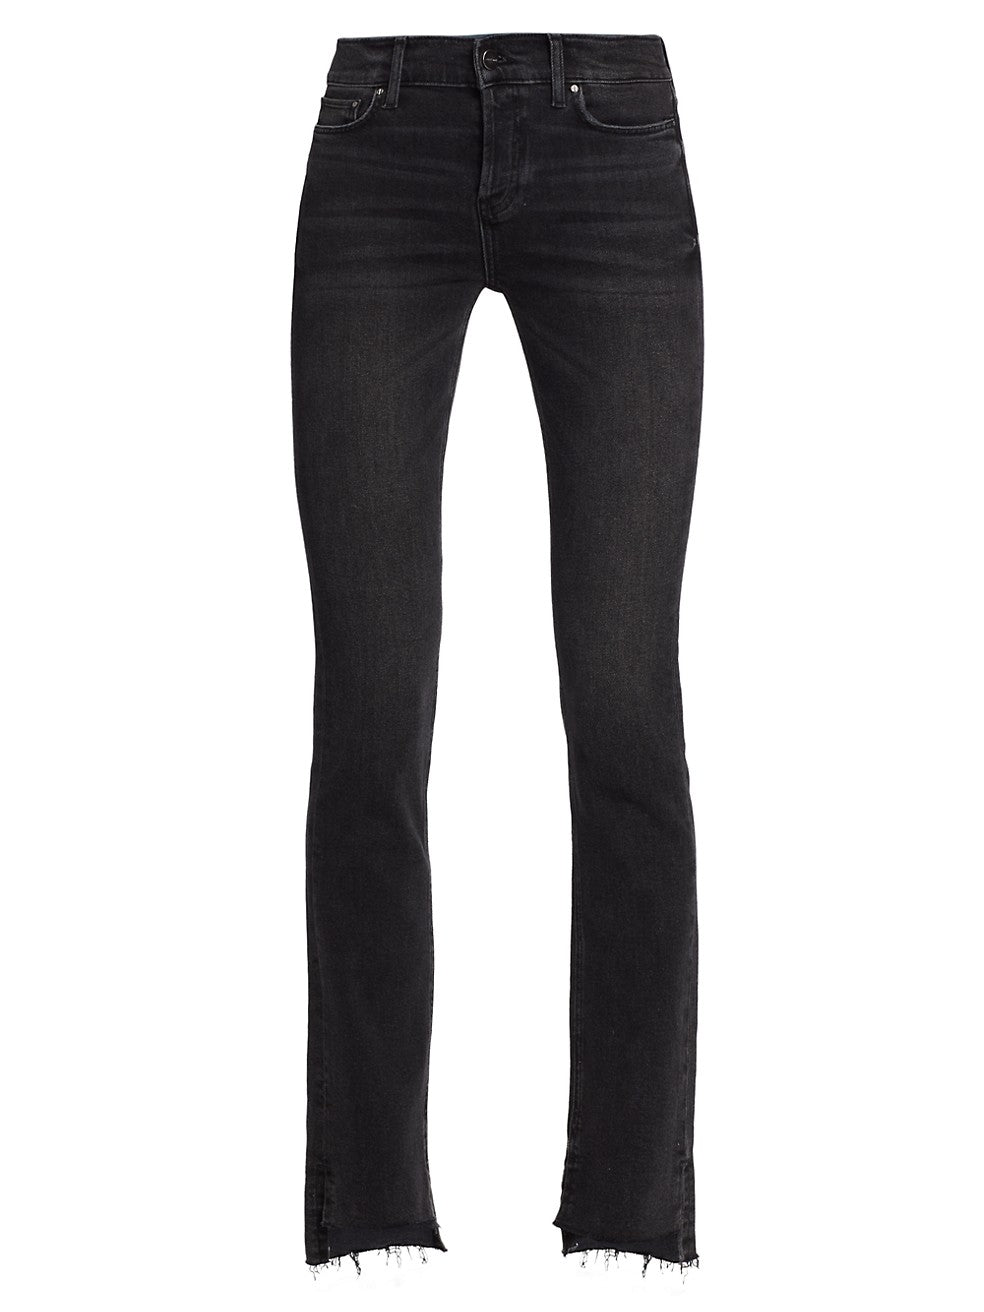 Anine Bing Tristen Low Rise Slim Boot Cut Jeans